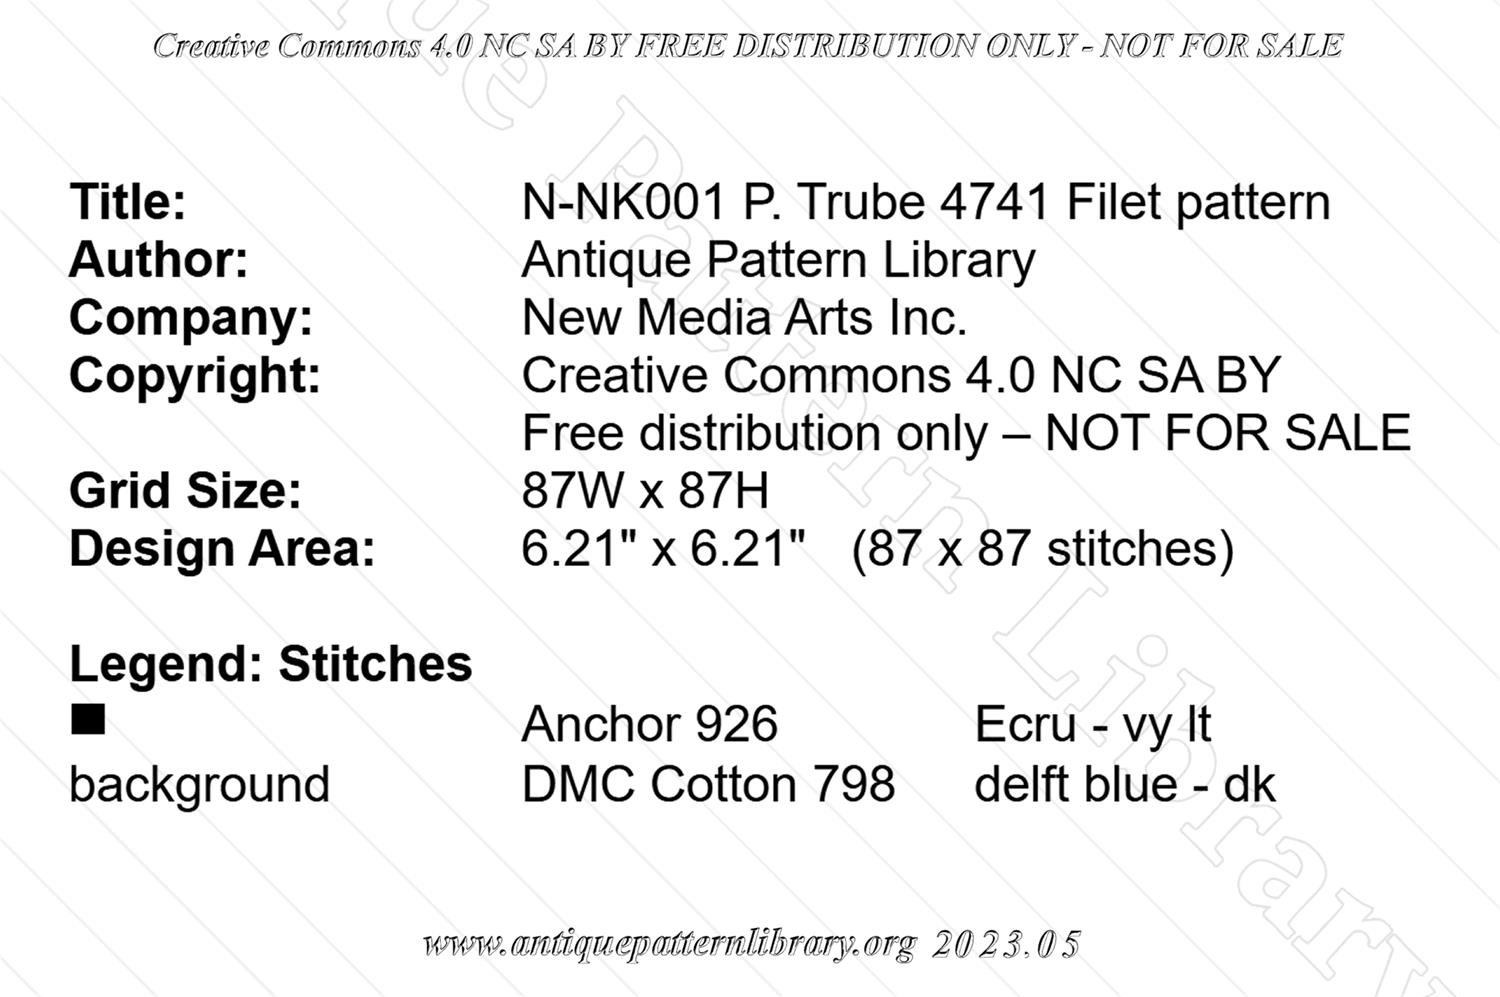 N-NK001 Filet pattern